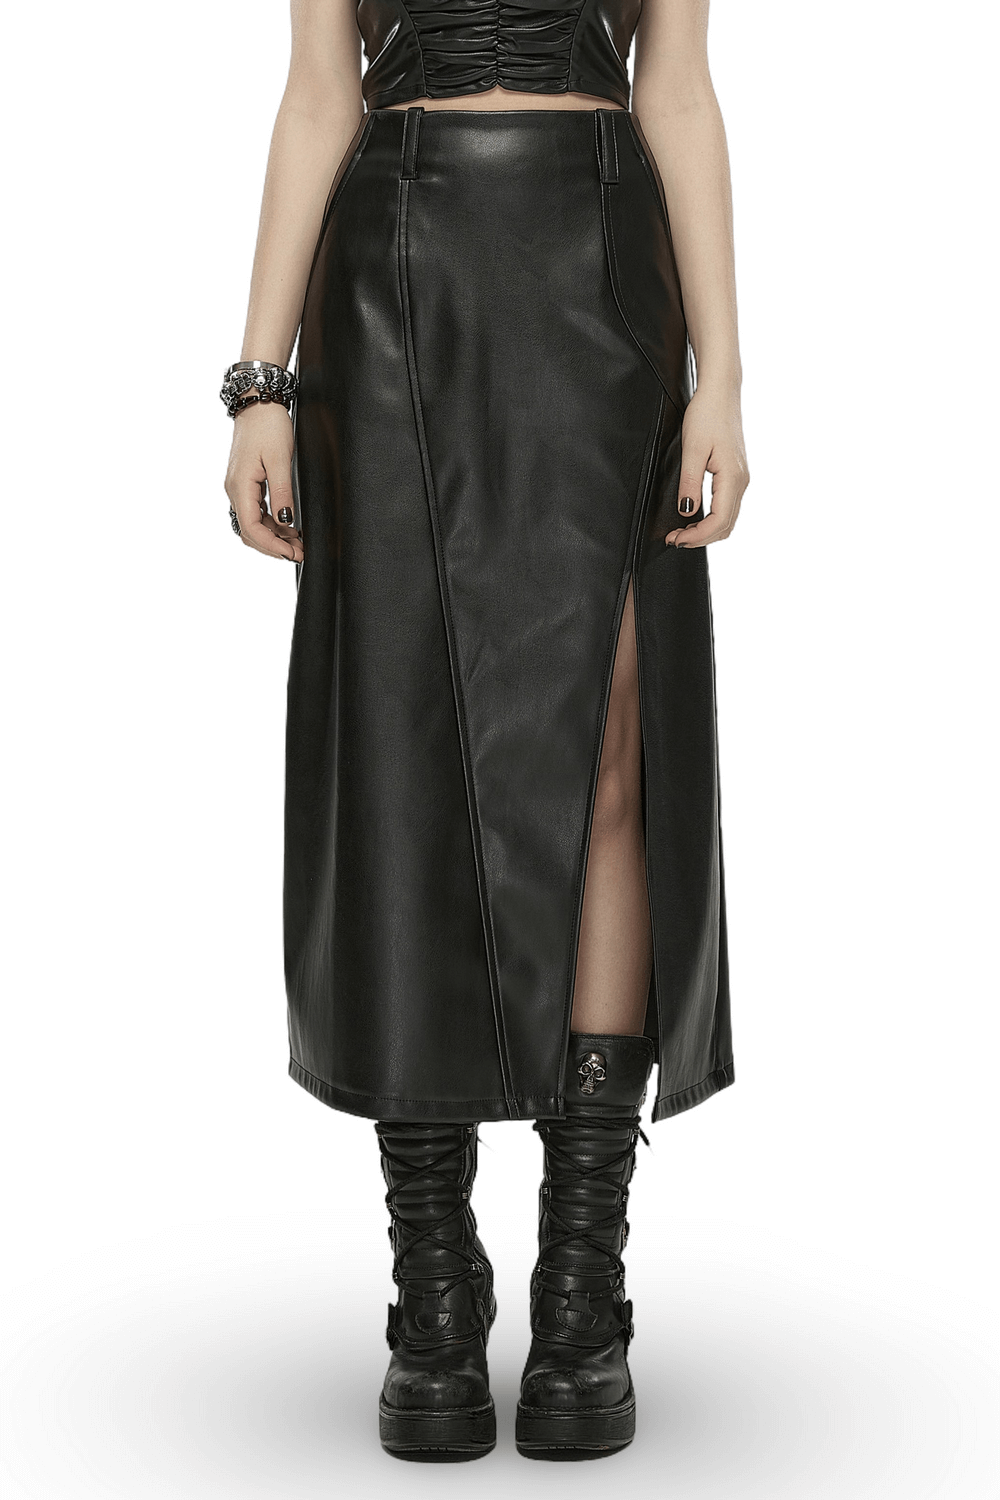 Punk Rave Black Faux Leather High Waist A-Line Split Skirt